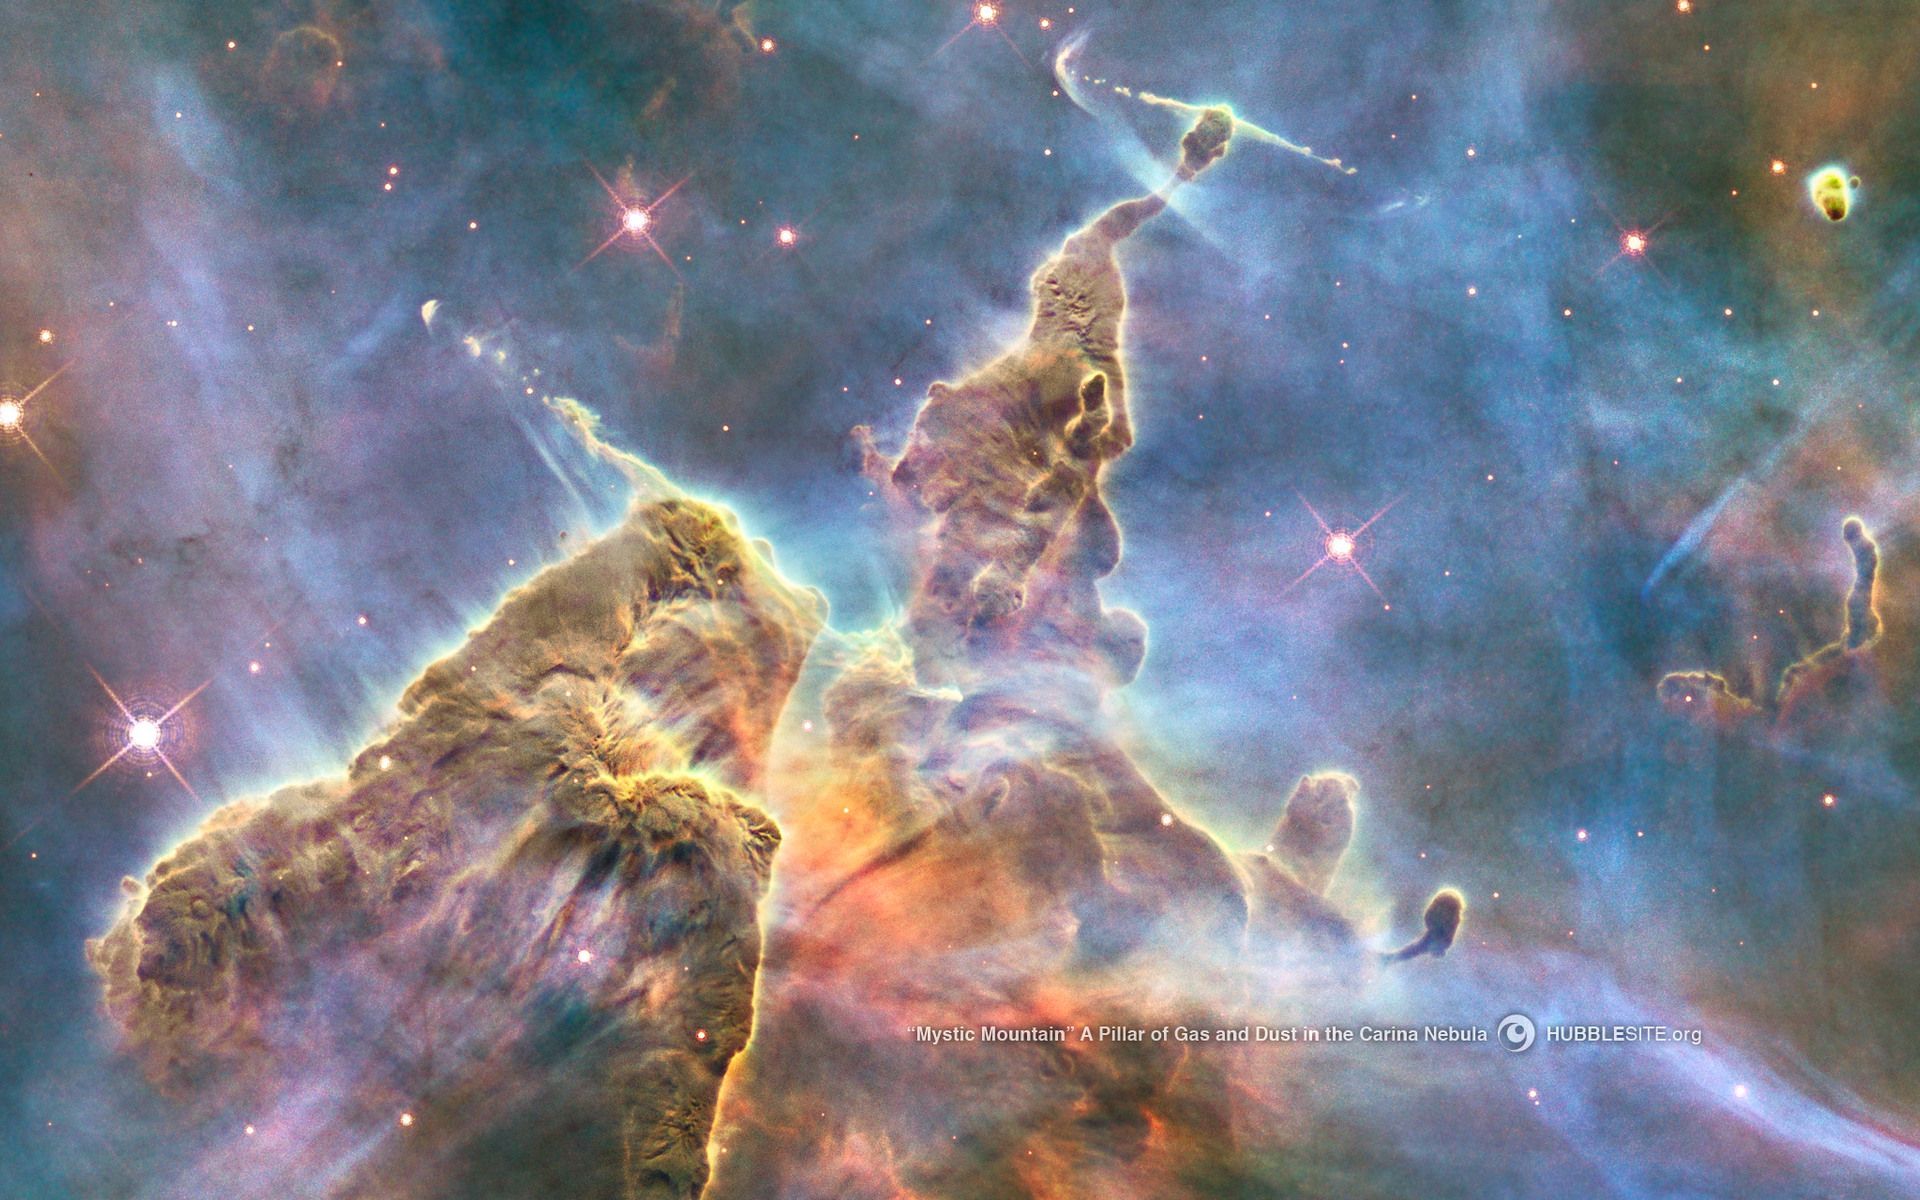 NASA images: Desktop wallpaper from outer space - TechRepublic